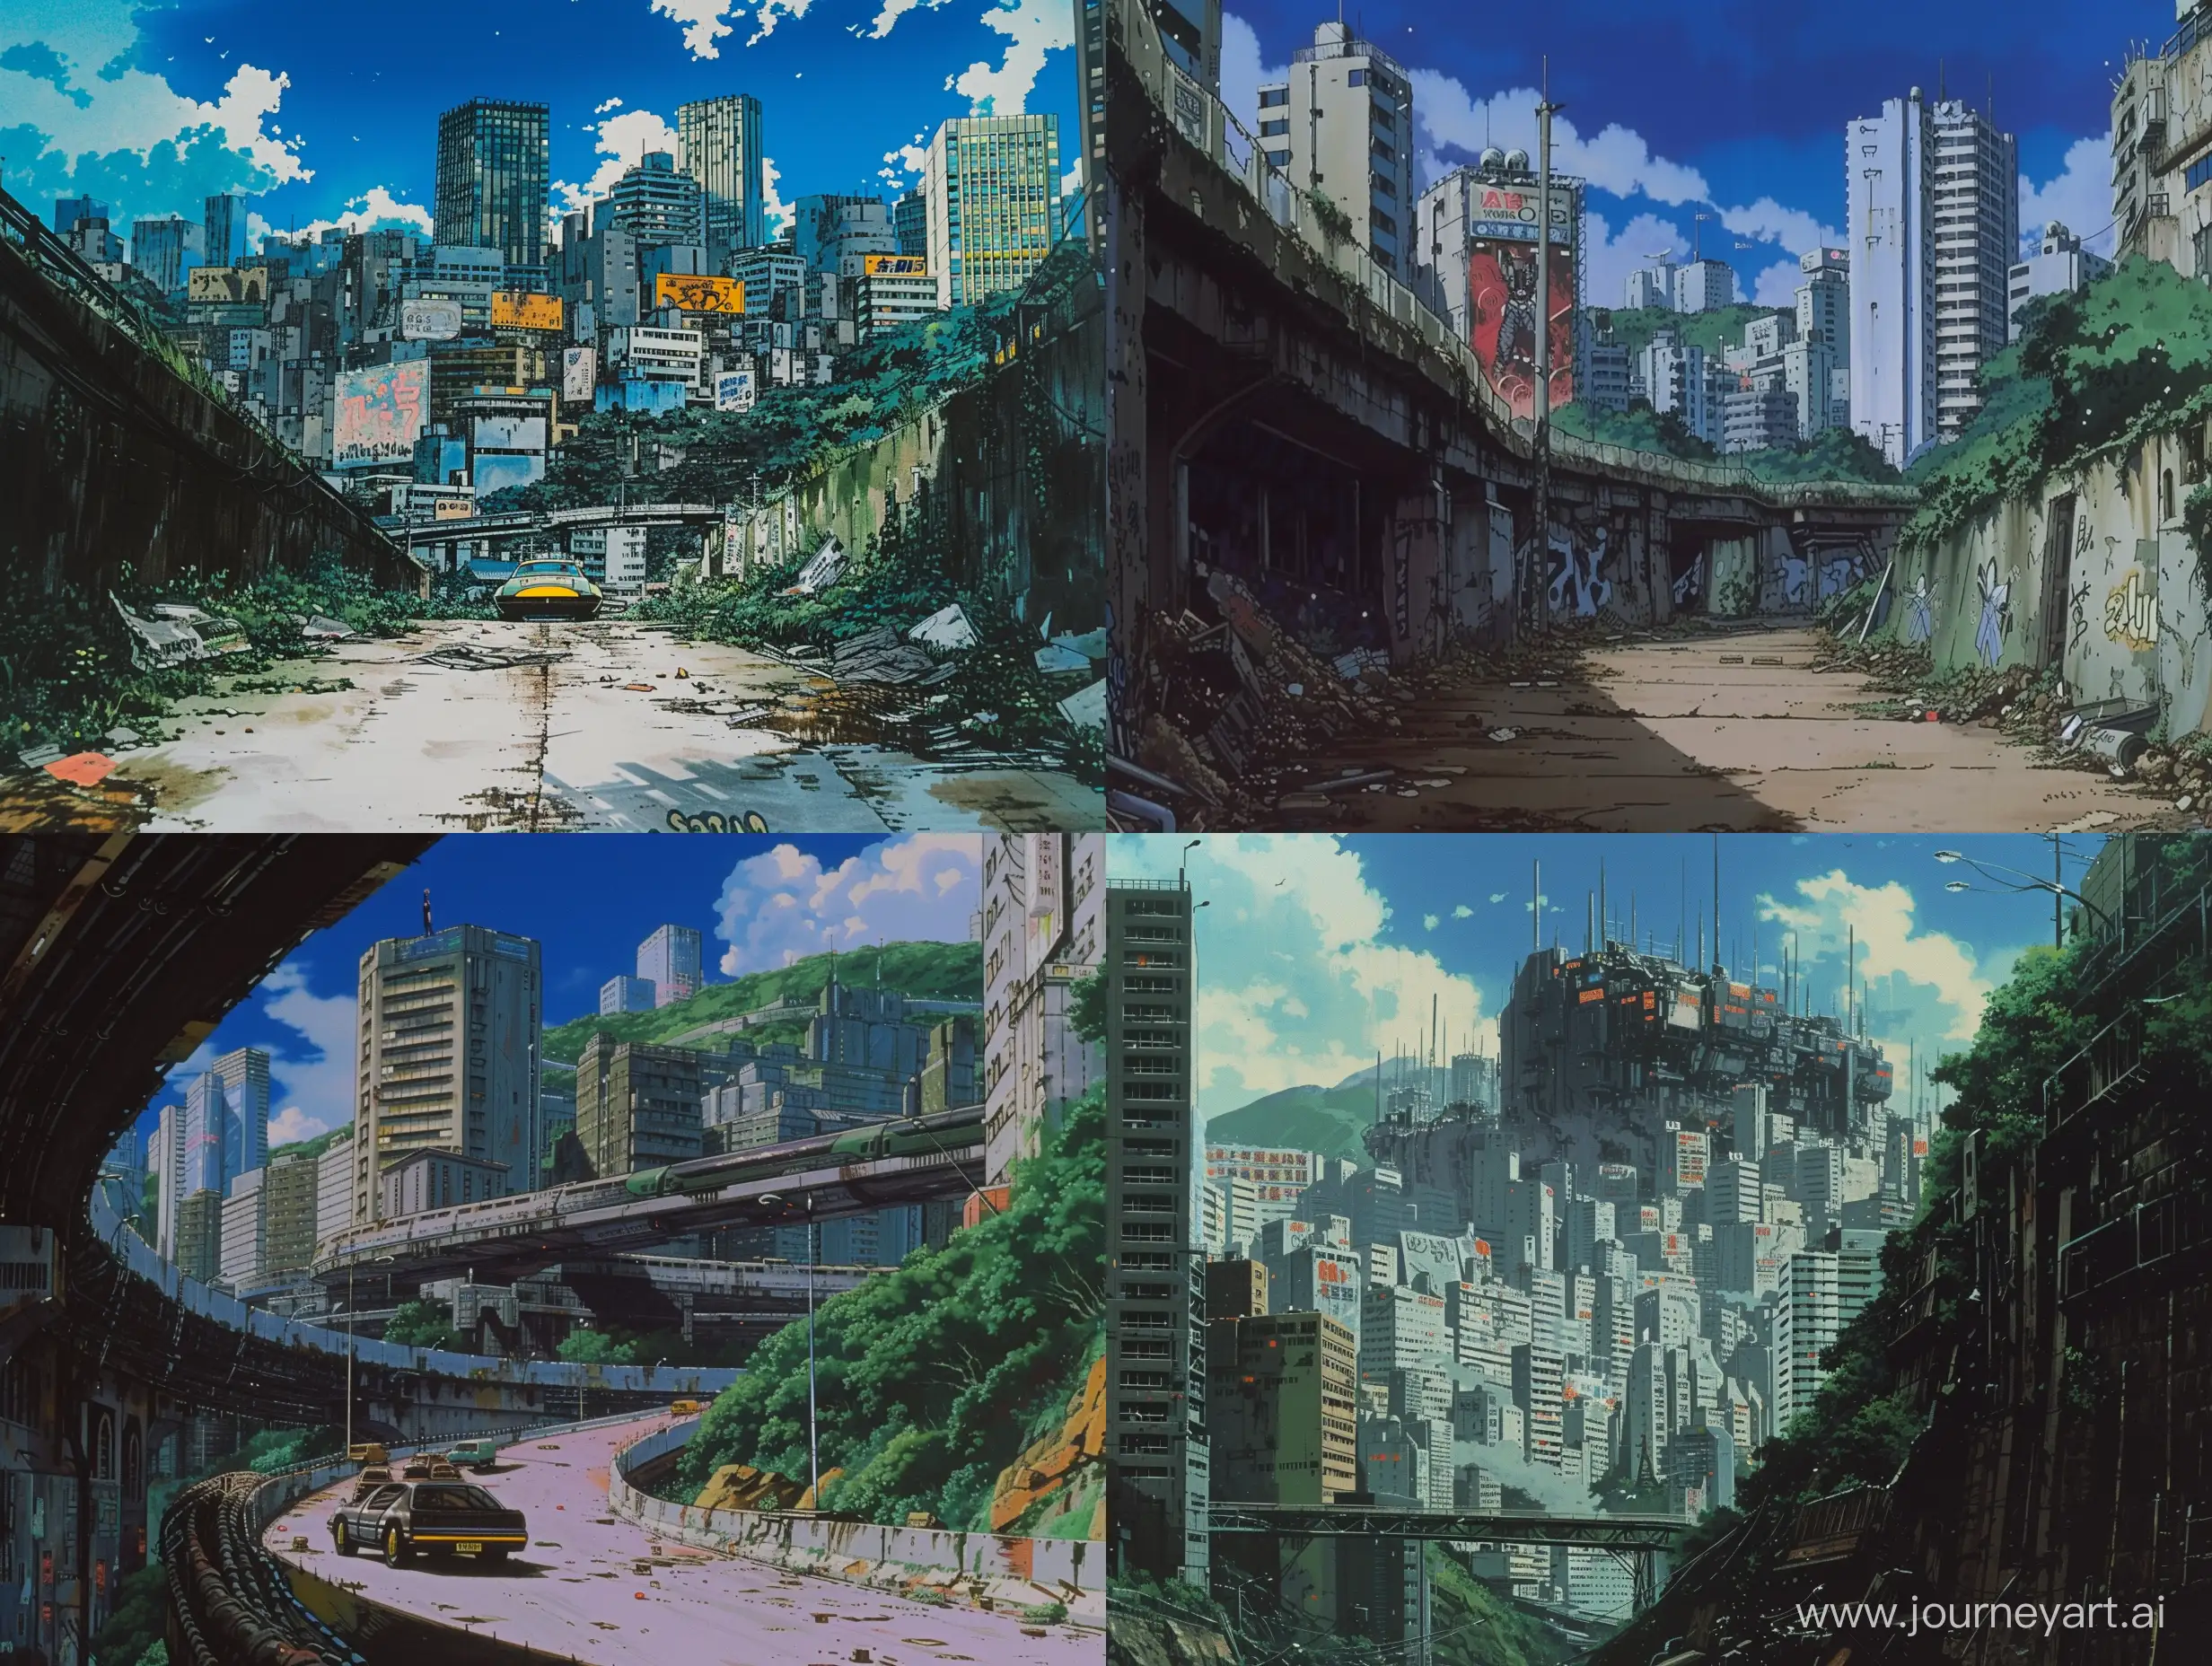 a old 90s cartoon still of a city, nostalgia, anime, akira 1988 still, full view, outside city environment, dystopian,

